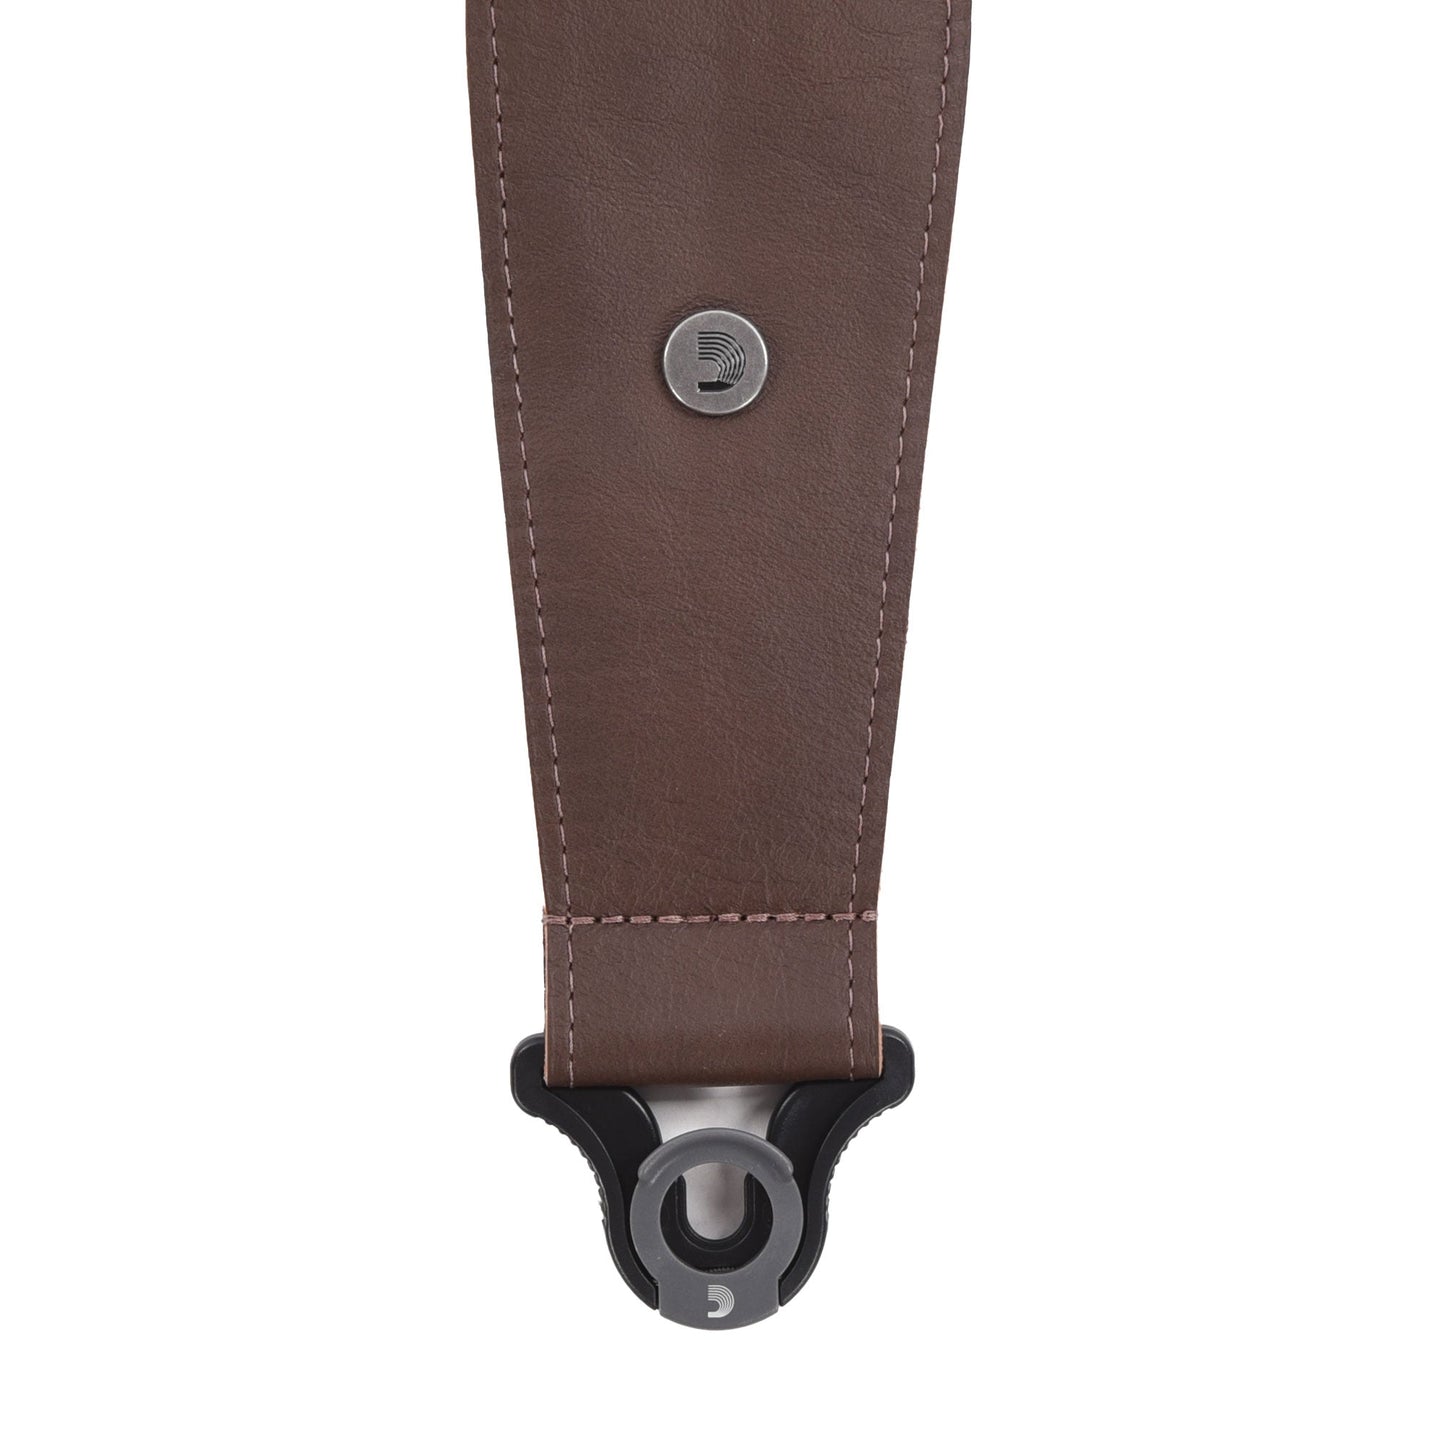 D'Addario 3.0" Comfort Leather Auto Lock Guitar Strap Brown Accessories / Straps